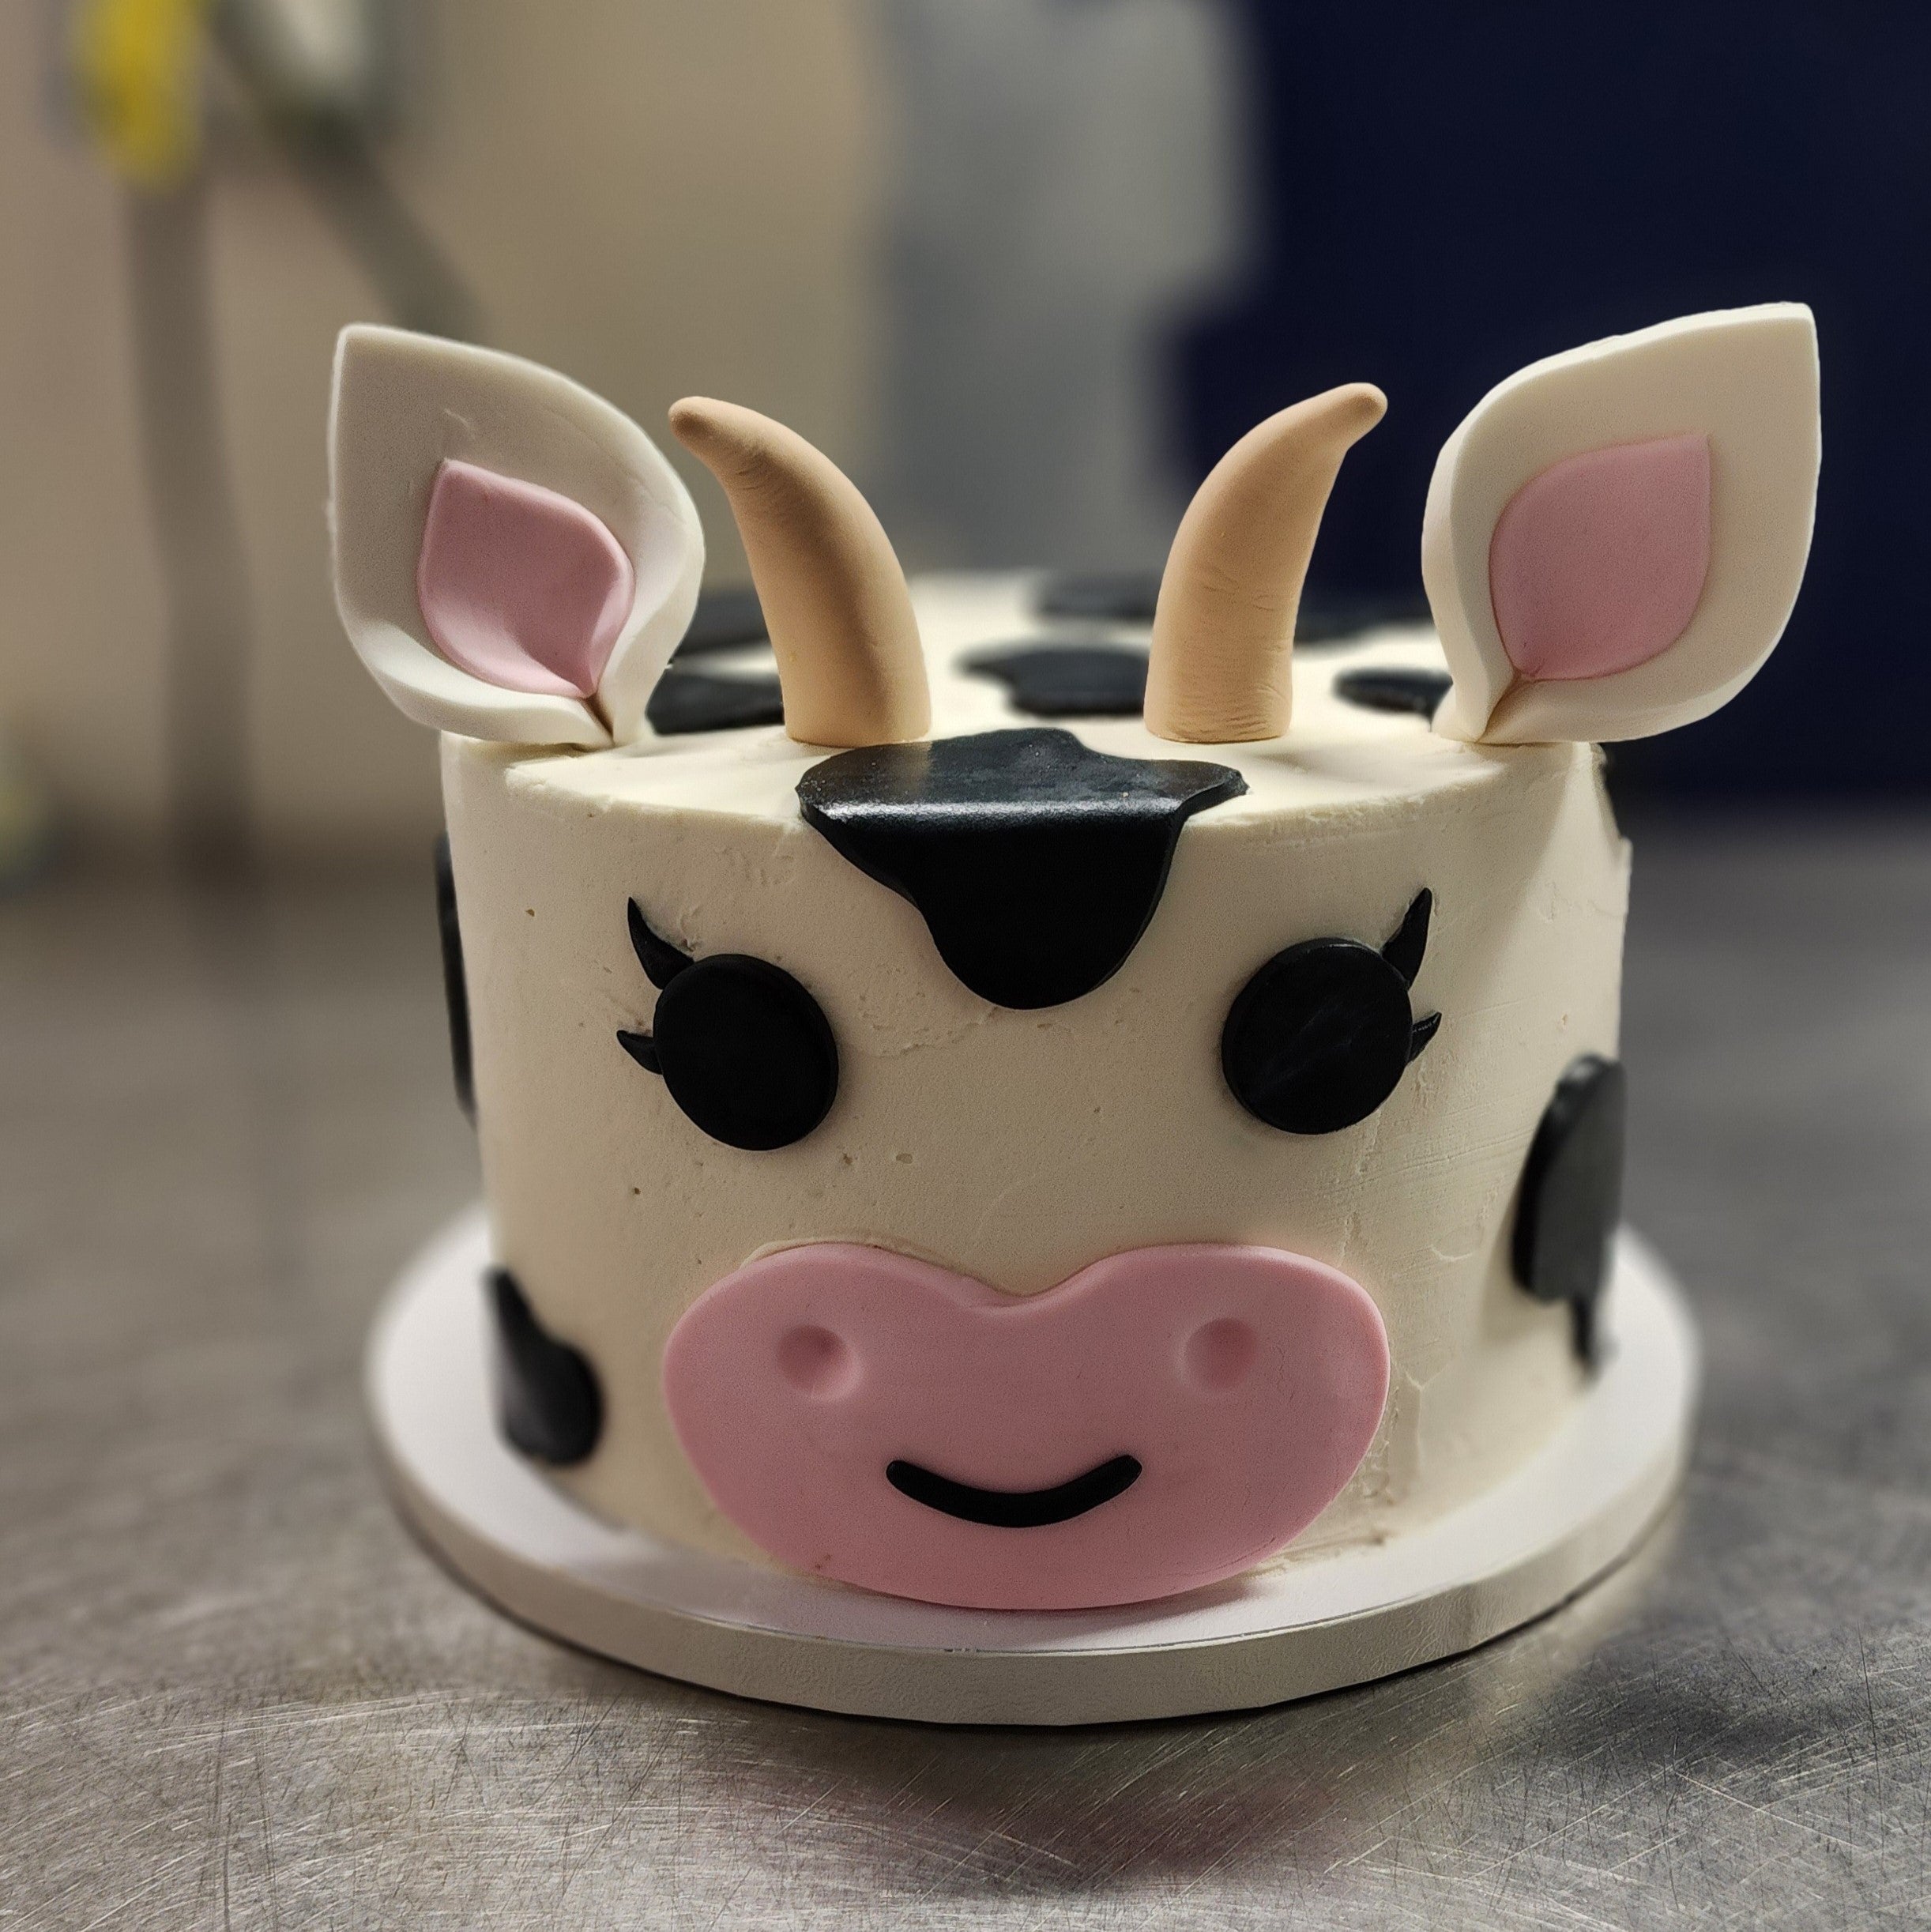 Carved Freesian Cow Cake – The Cake Guru